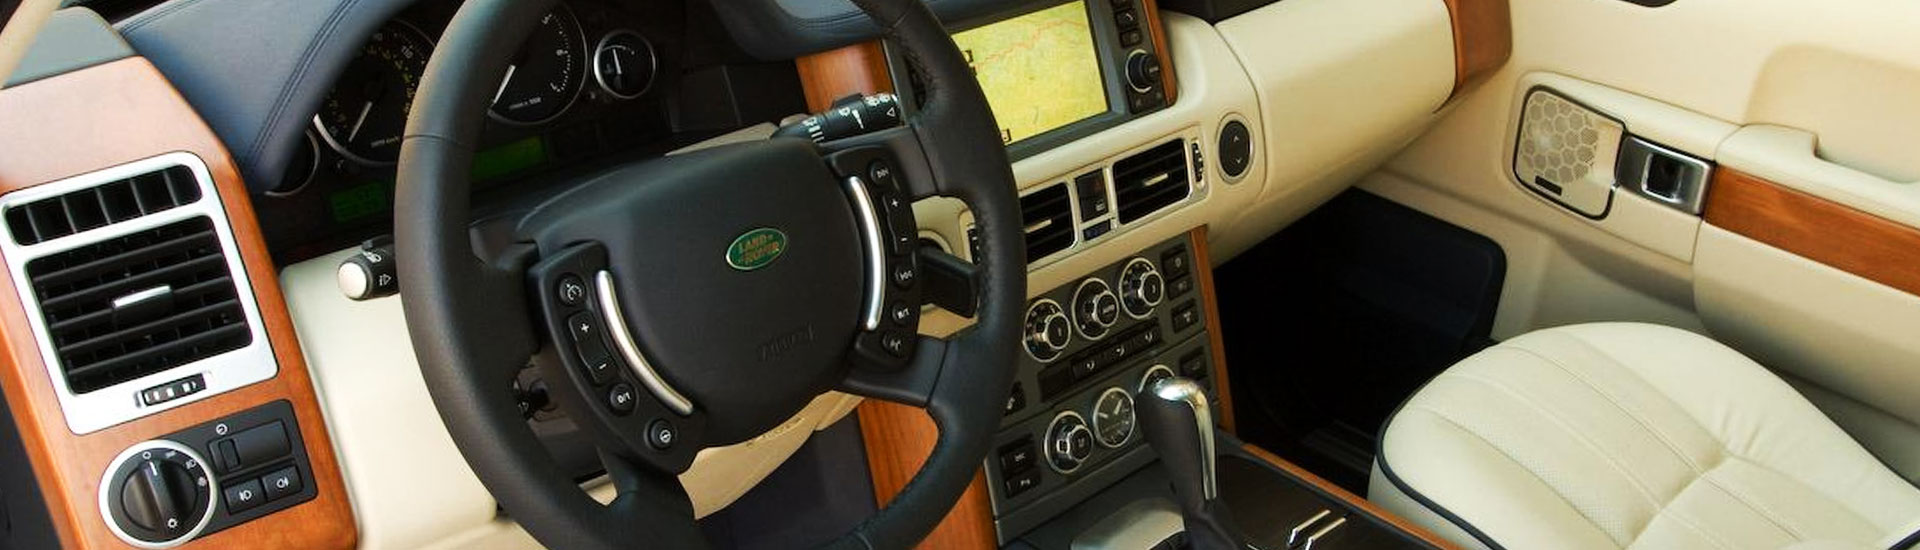 Land Rover Dash Kits